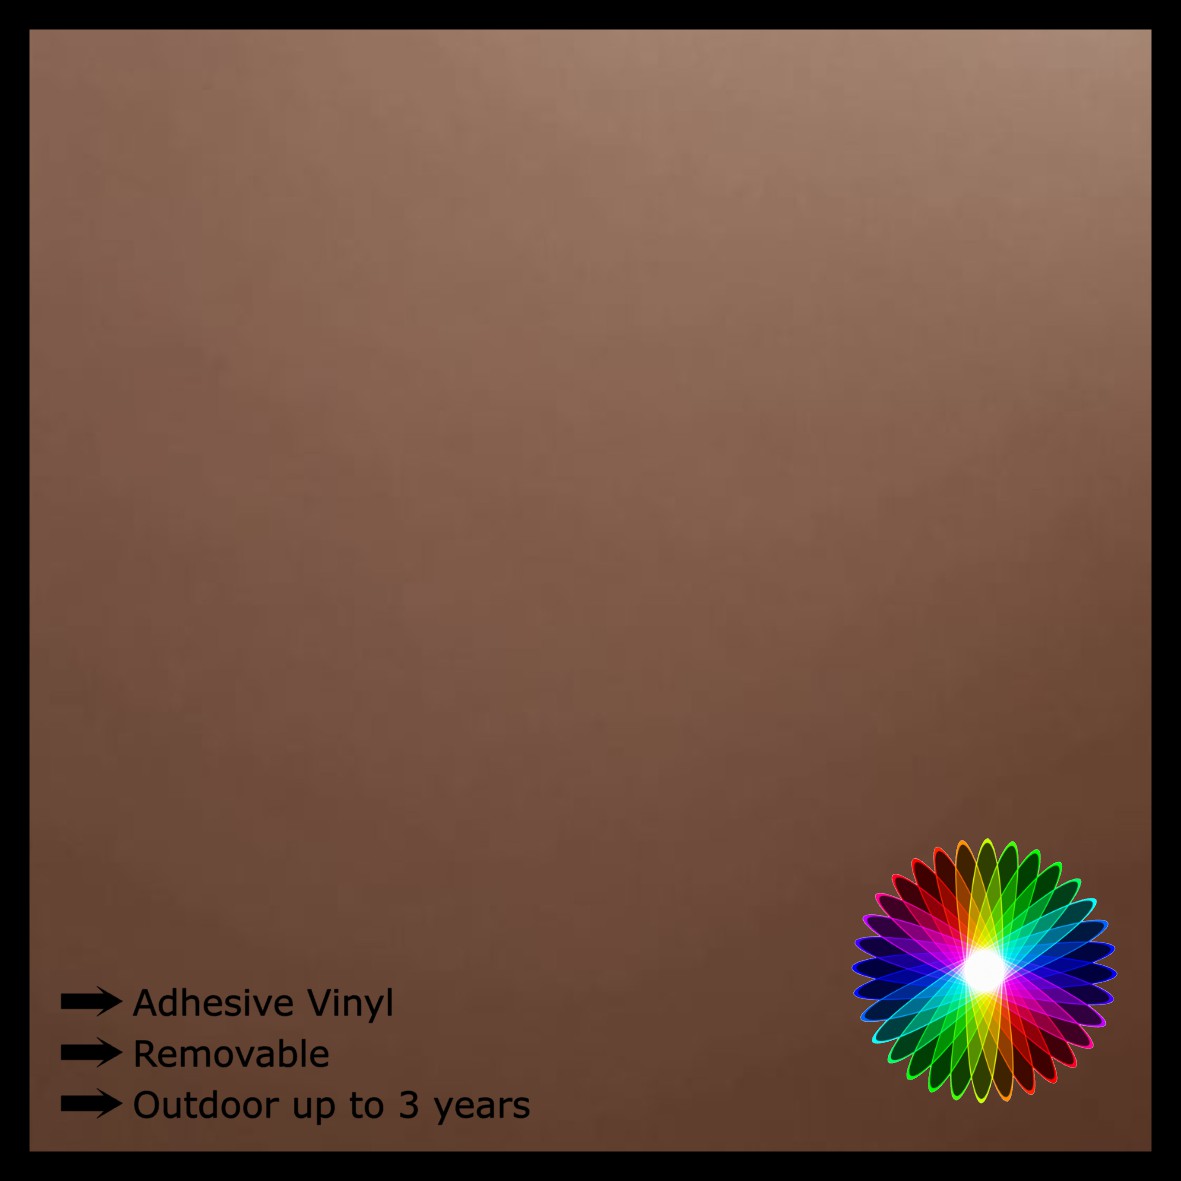 Removable Adhesive Vinyl Cricut, Rose Gold Adhesive Vinyl